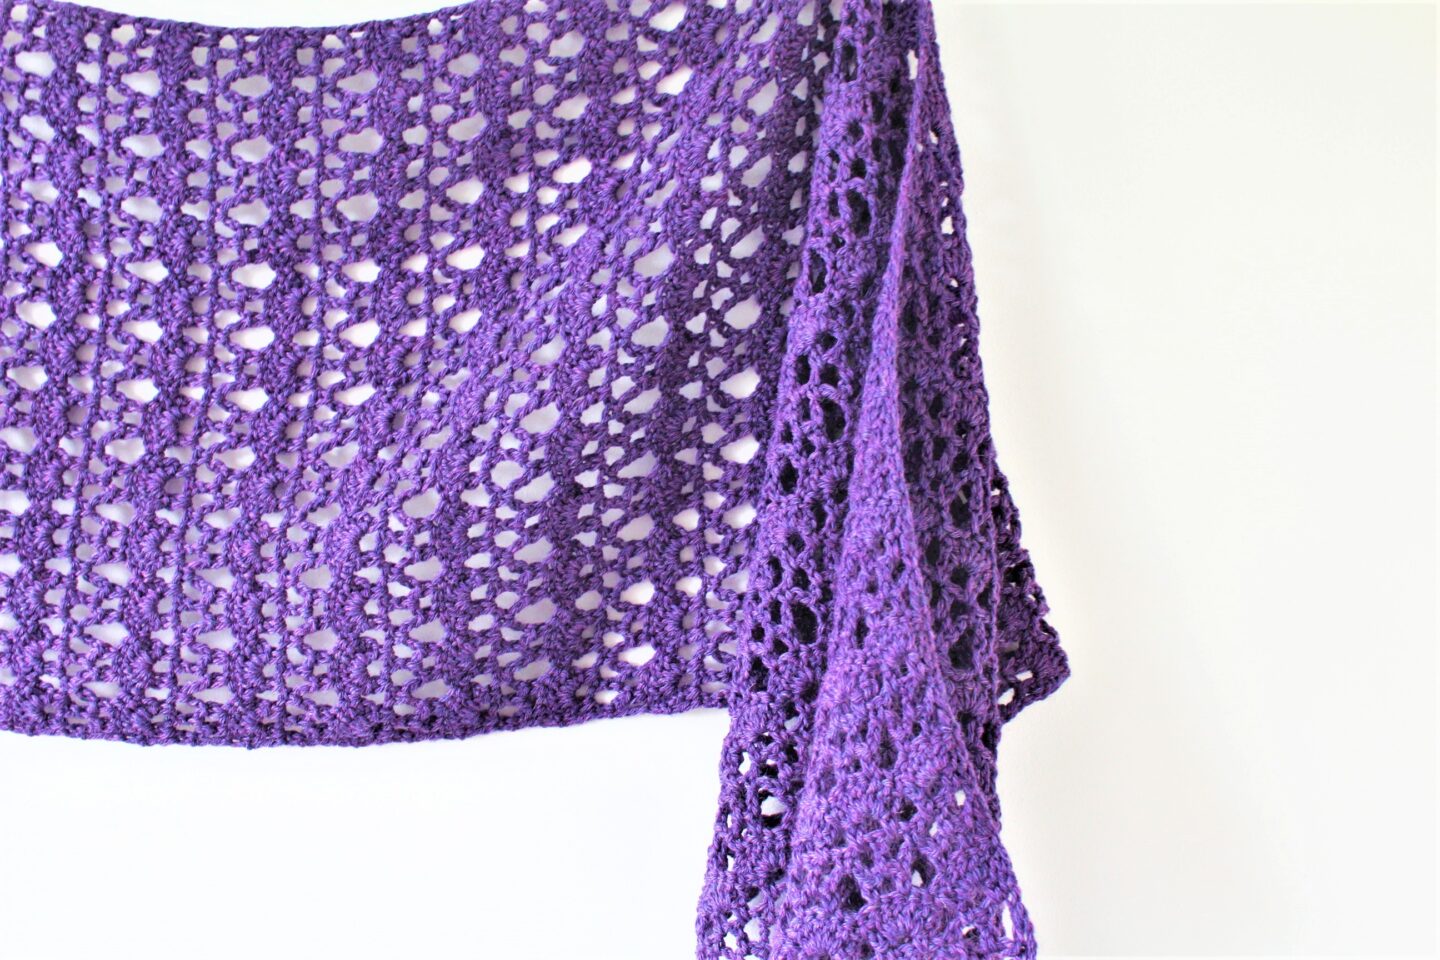 Stitch pattern of the Alice shawl